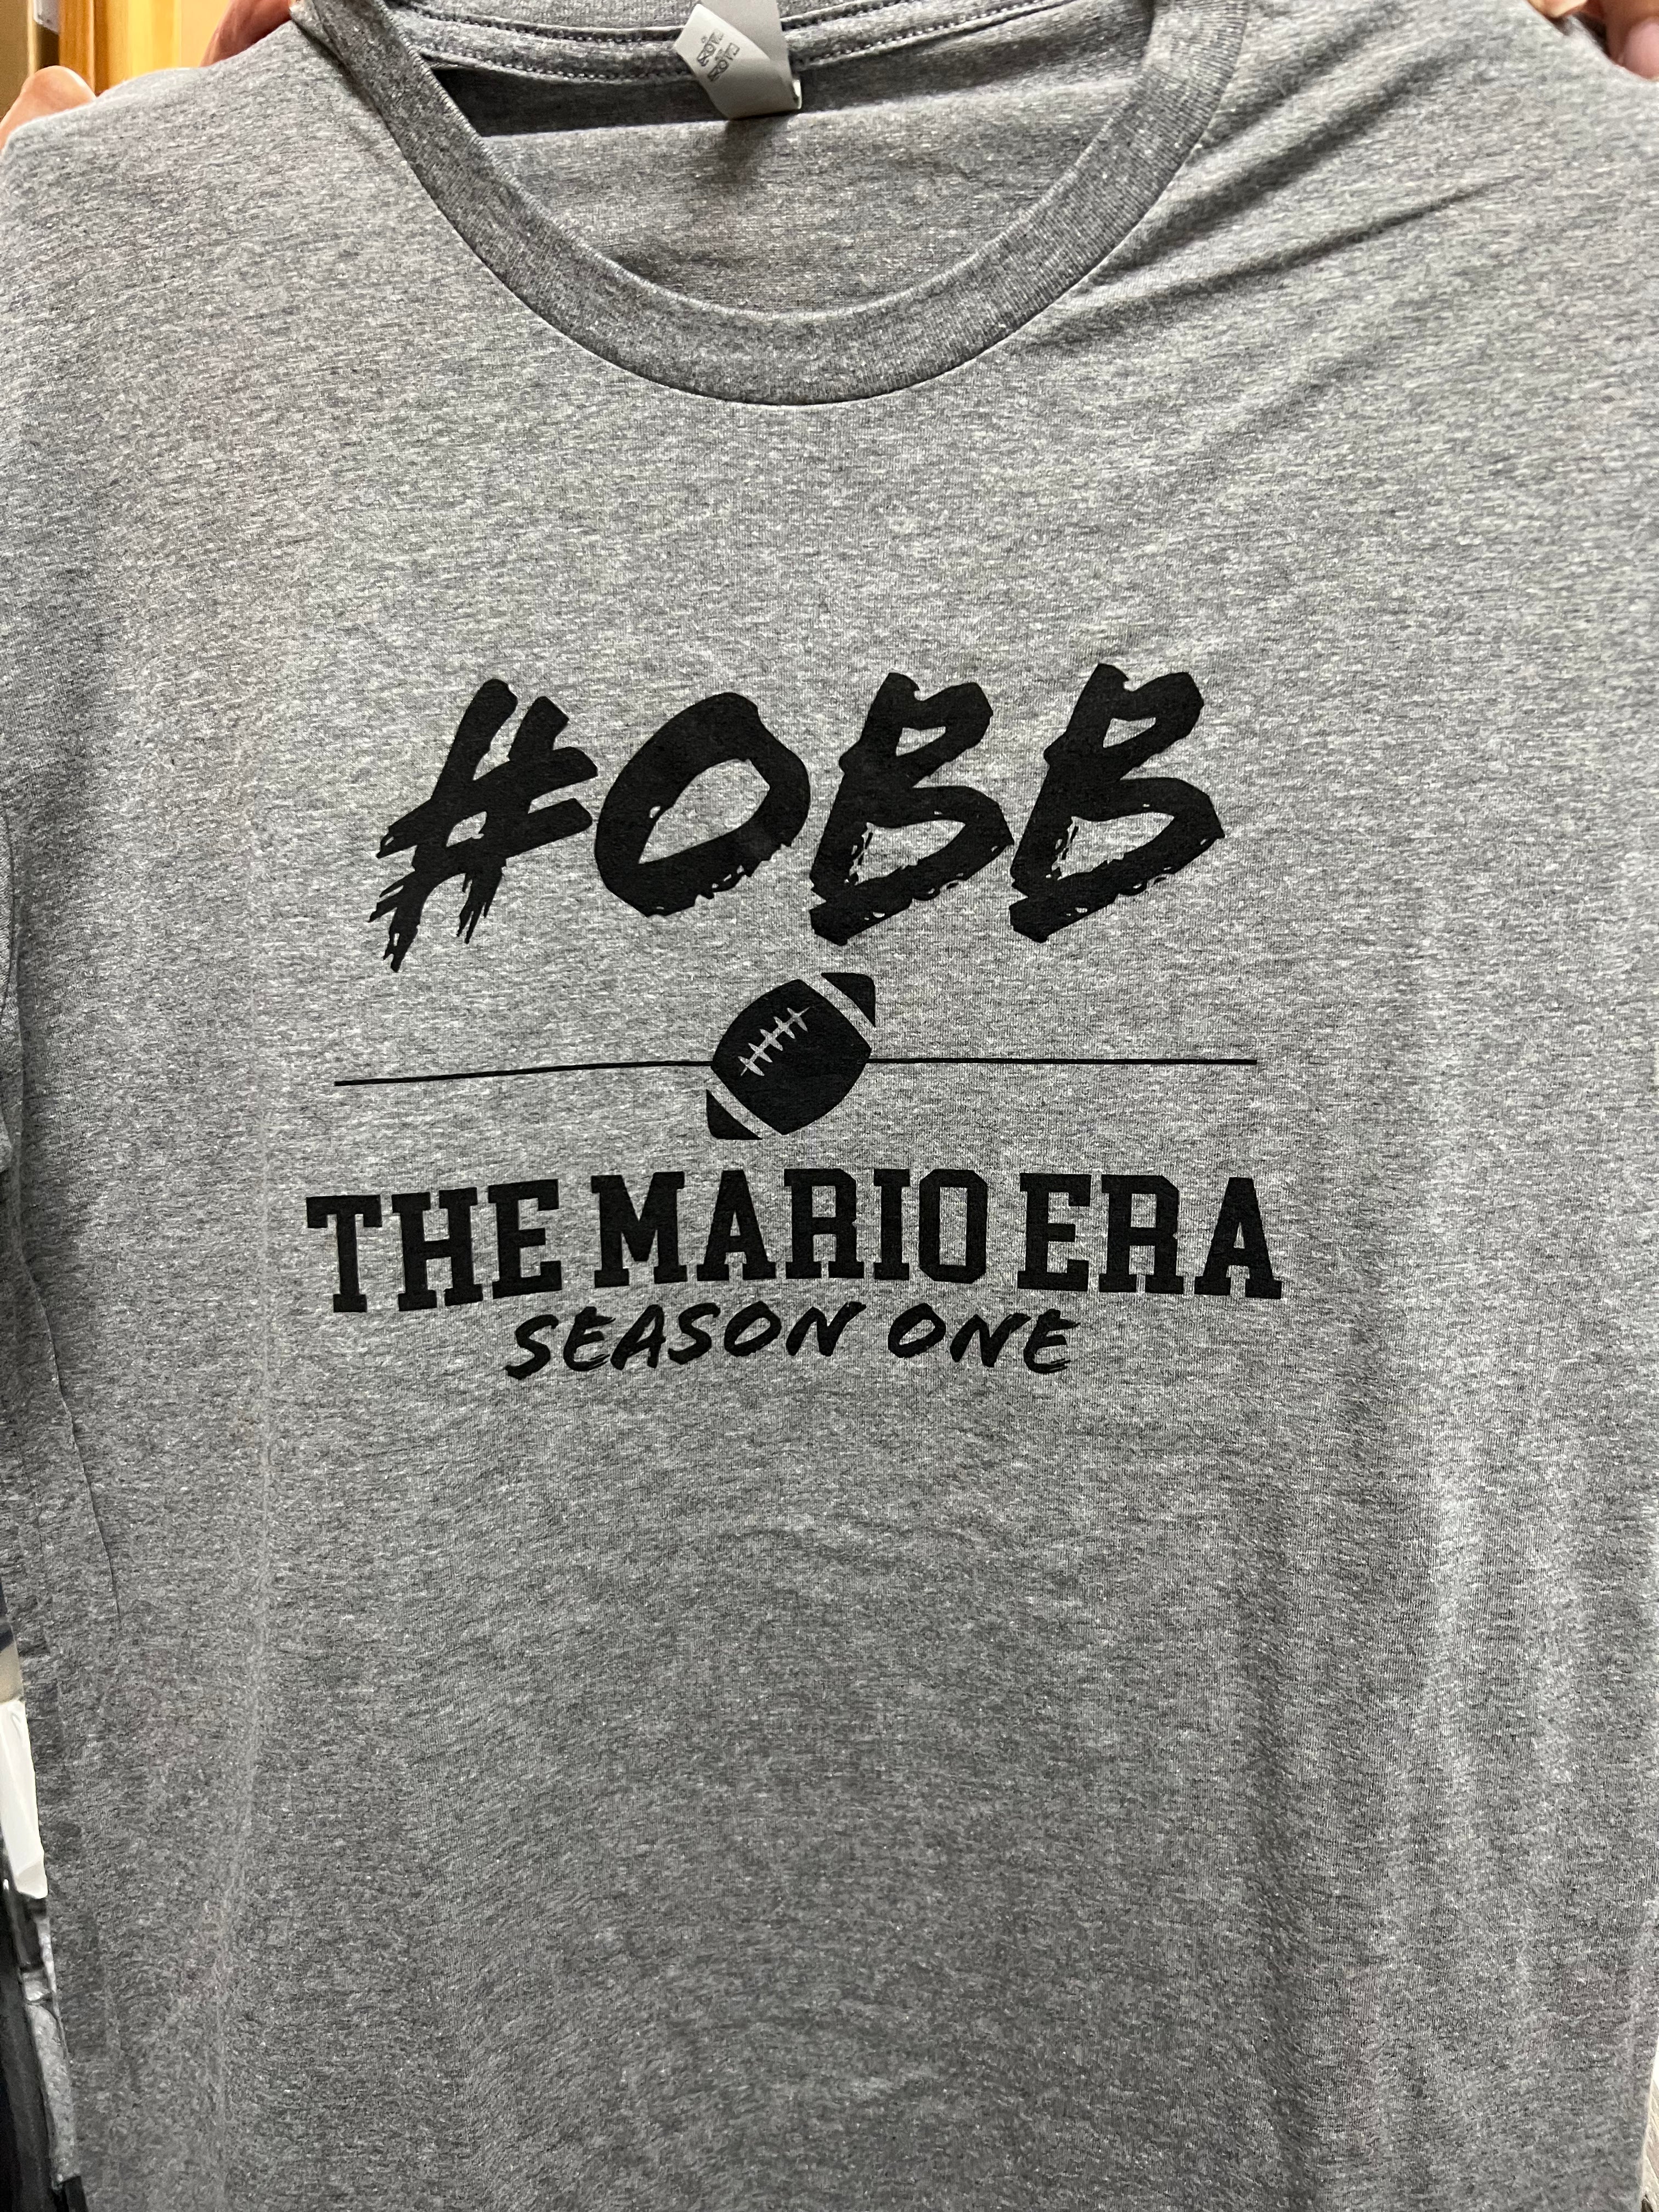 Orange Bowl Boys #OBB “Mario Era” Men’s Tri-Blend T-Shirt - Heather Grey